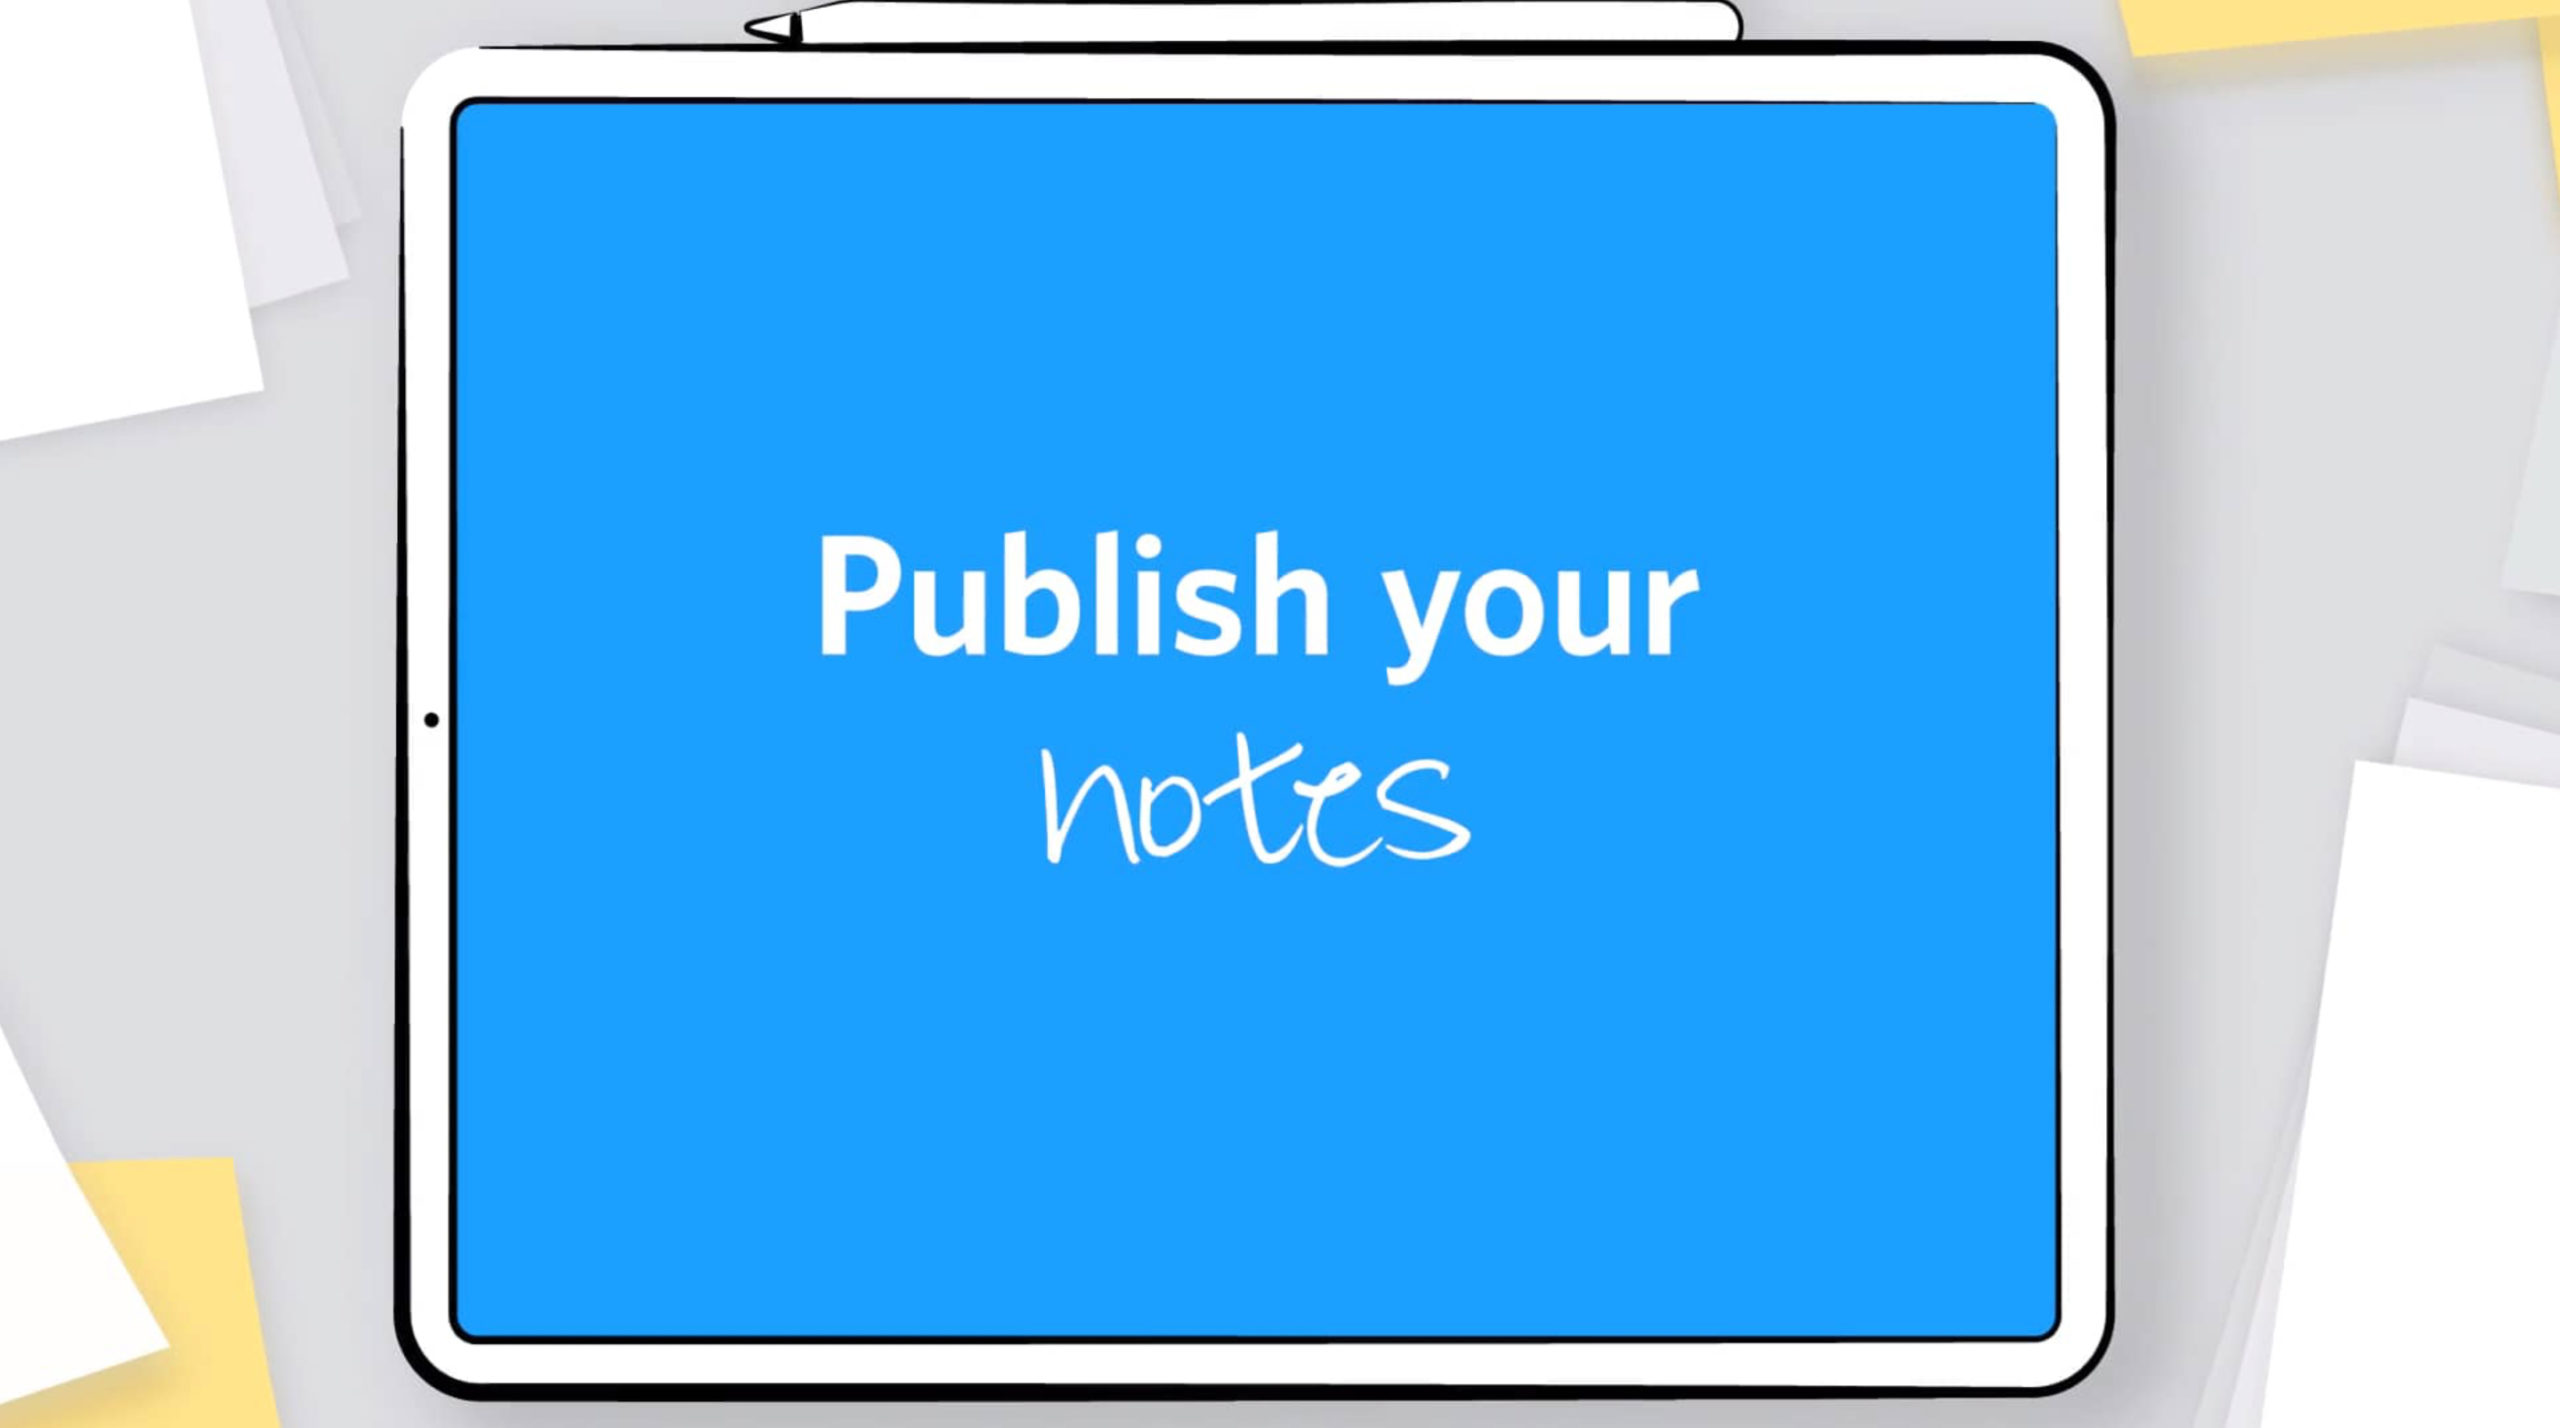 Publish your notes